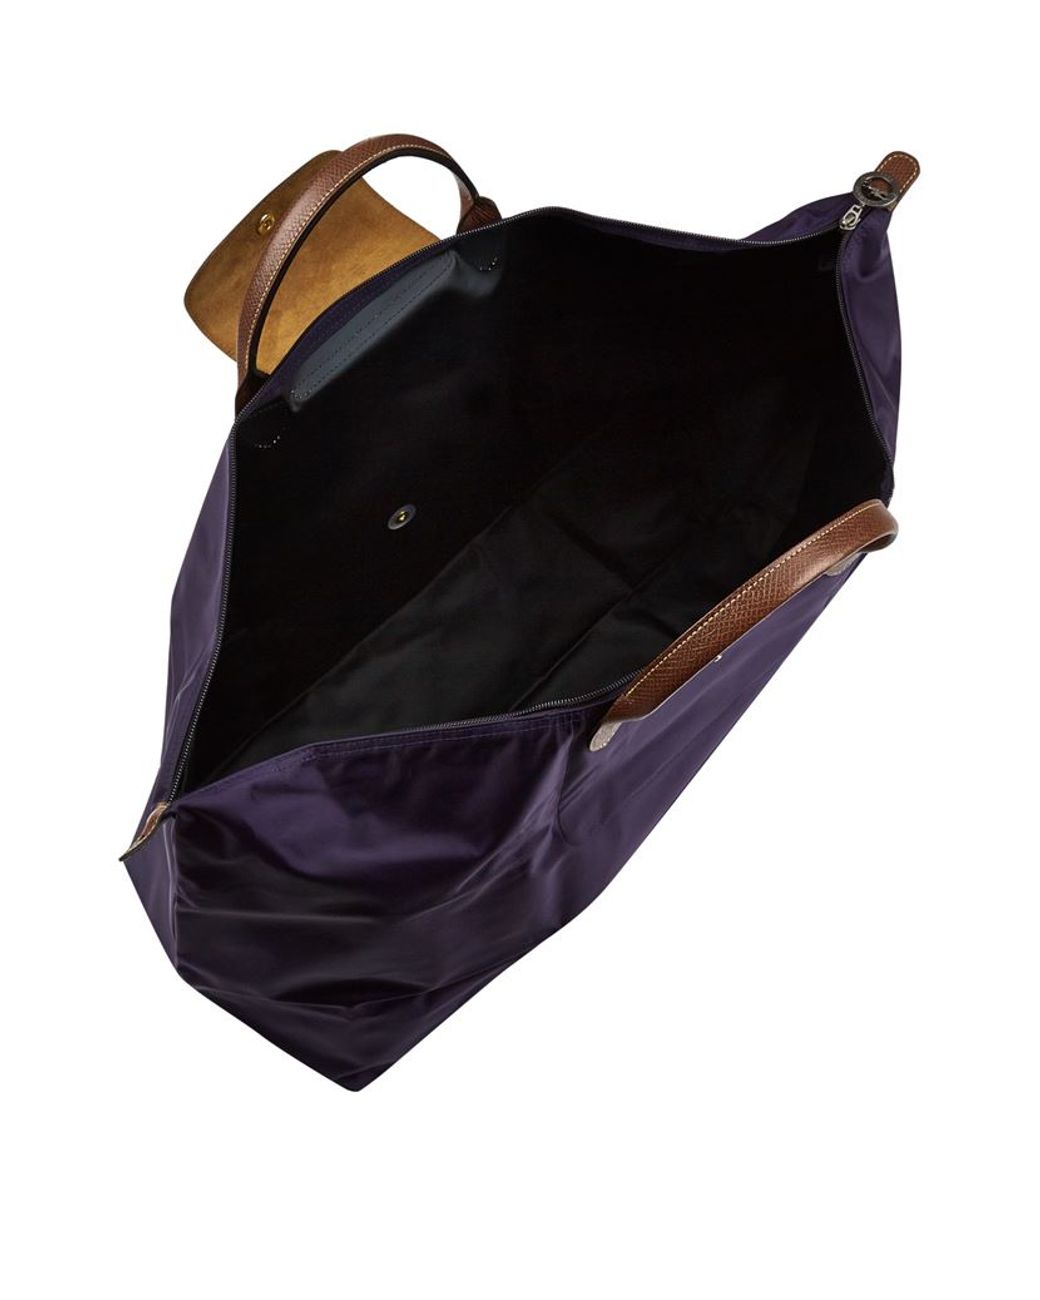 Longchamp Le Pliage Extra-large Travel Bag in Blue